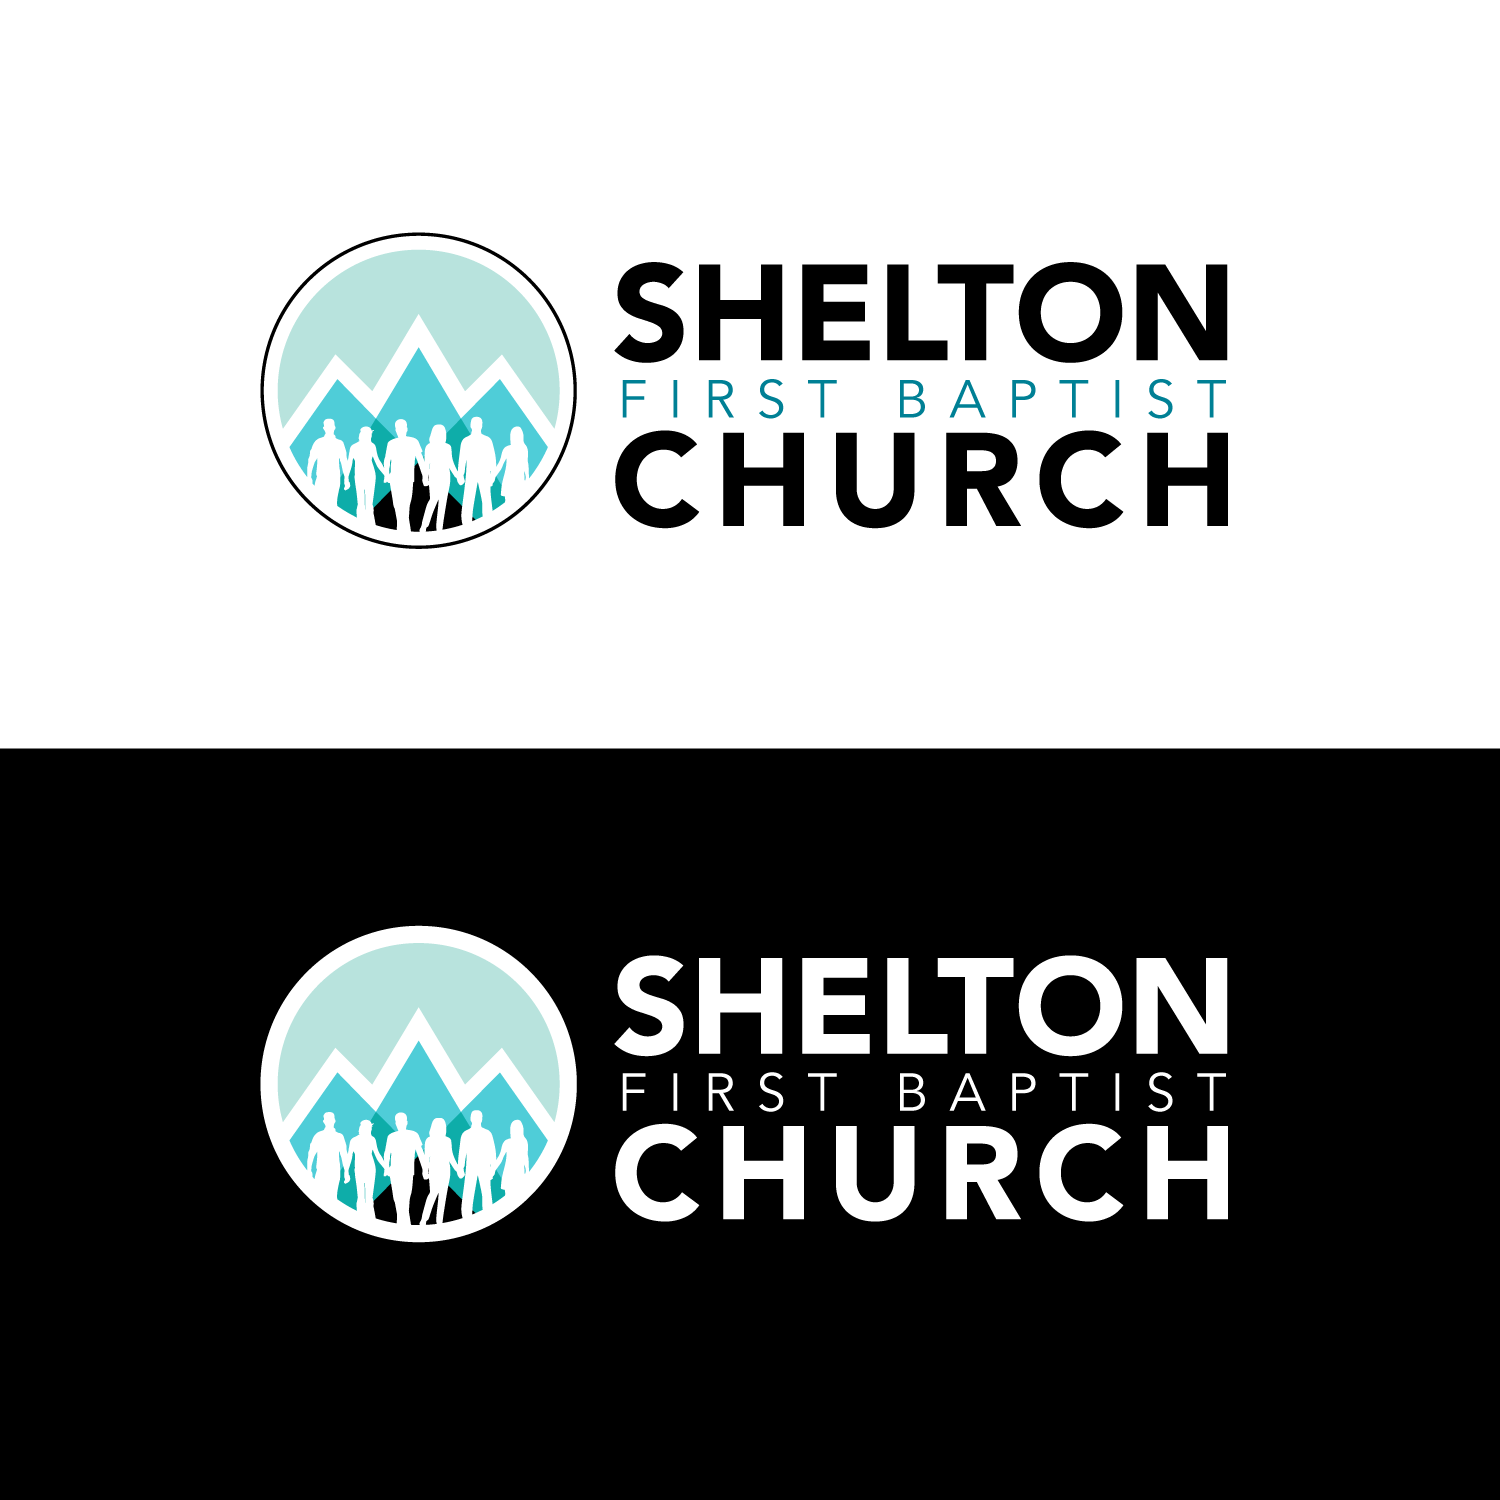 CC Lightning Logo - Modern, Professional, Church Logo Design for Shelton First Baptist ...